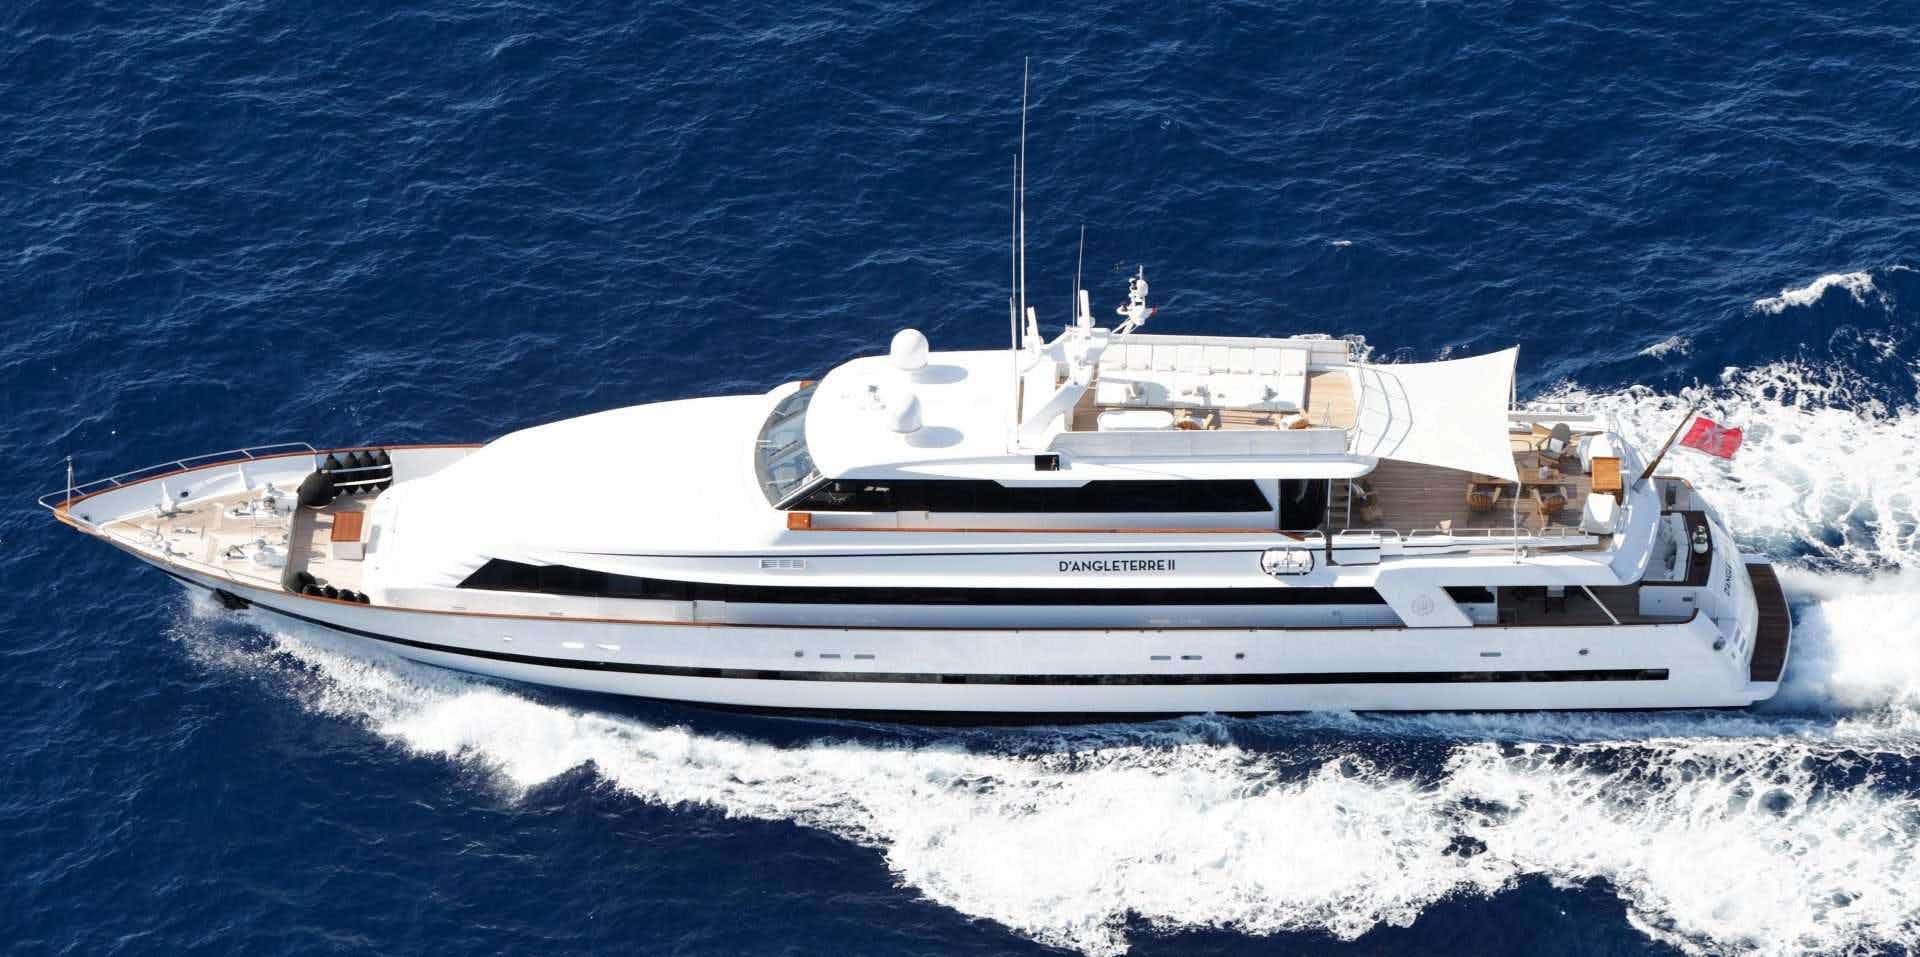 SEA LADY II - Motor Boat Charter Balearics & Boat hire in W. Med -Naples/Sicily, W. Med -Riviera/Cors/Sard., W. Med - Spain/Balearics 1